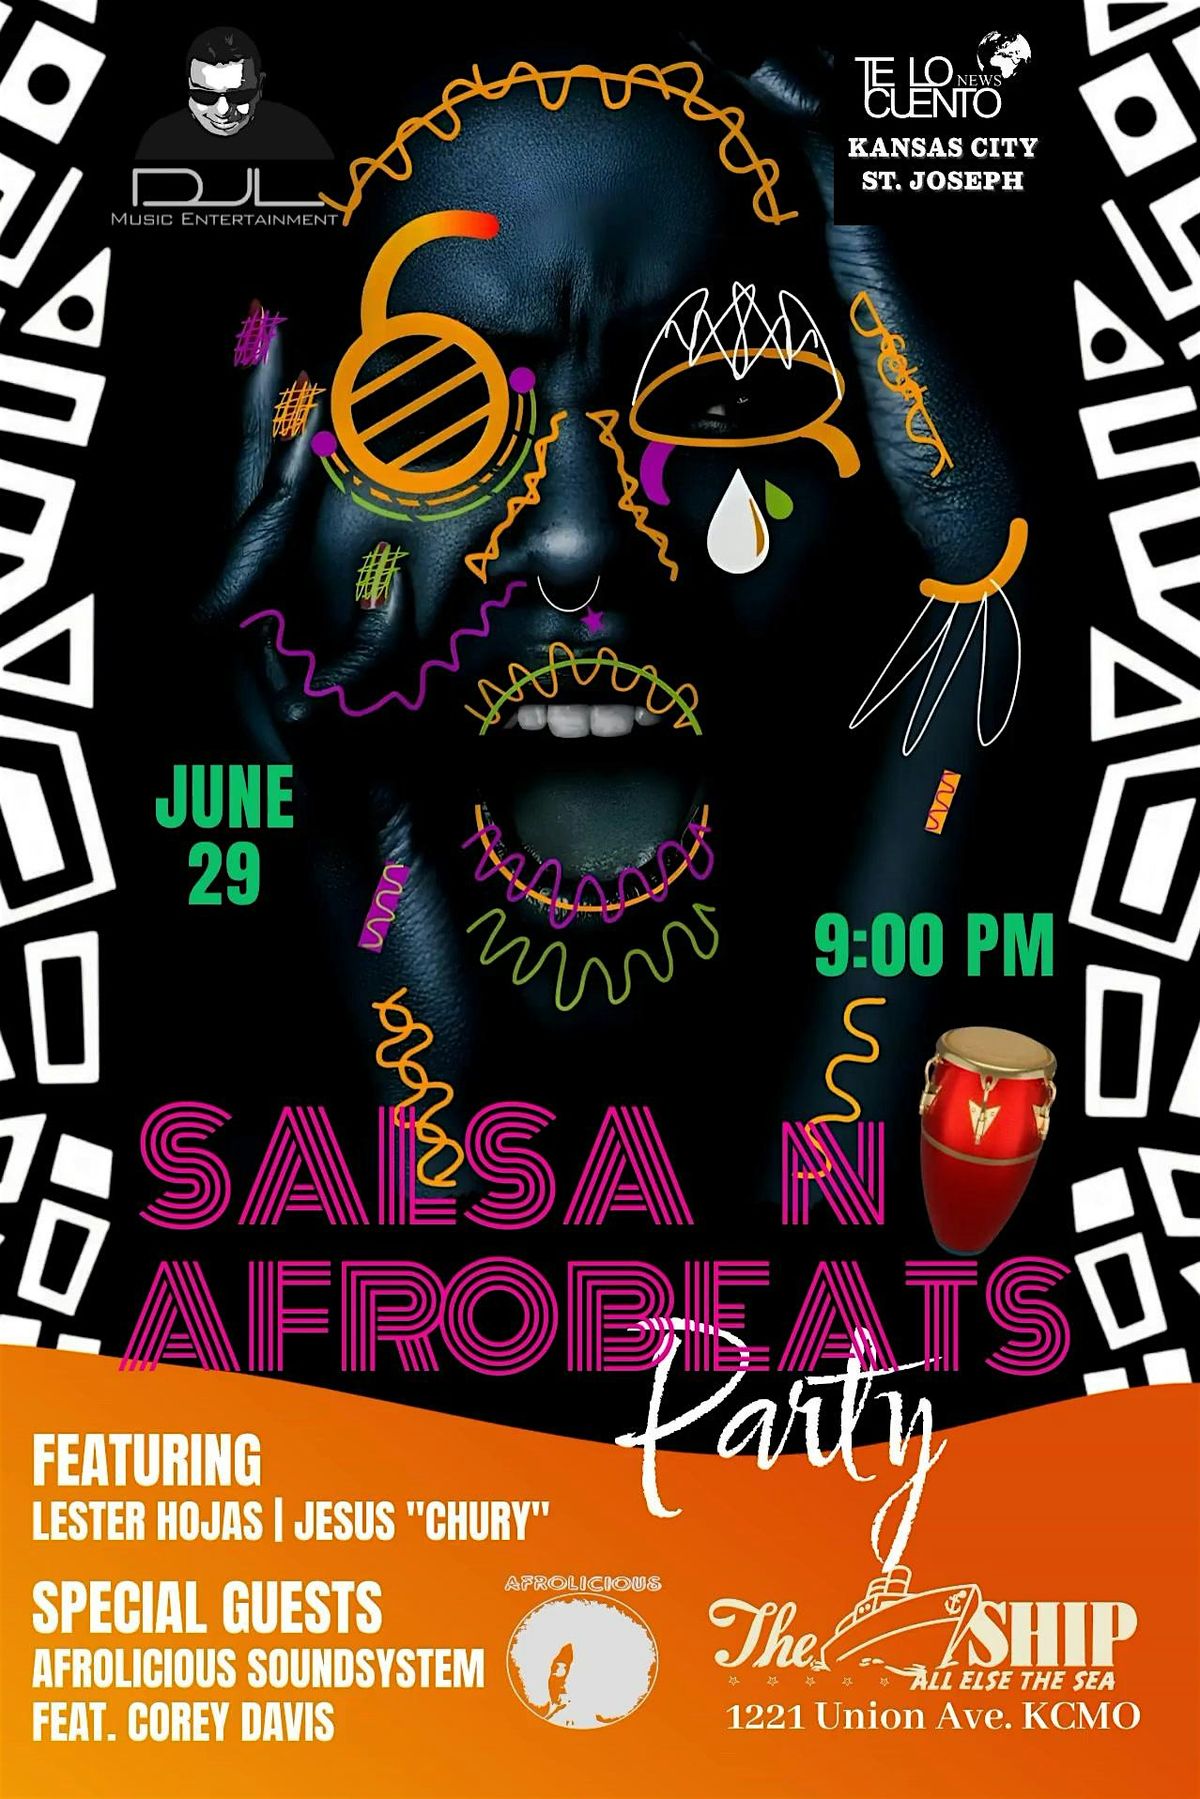 DJ Luis Presents: Salsa & Afrobeats Party